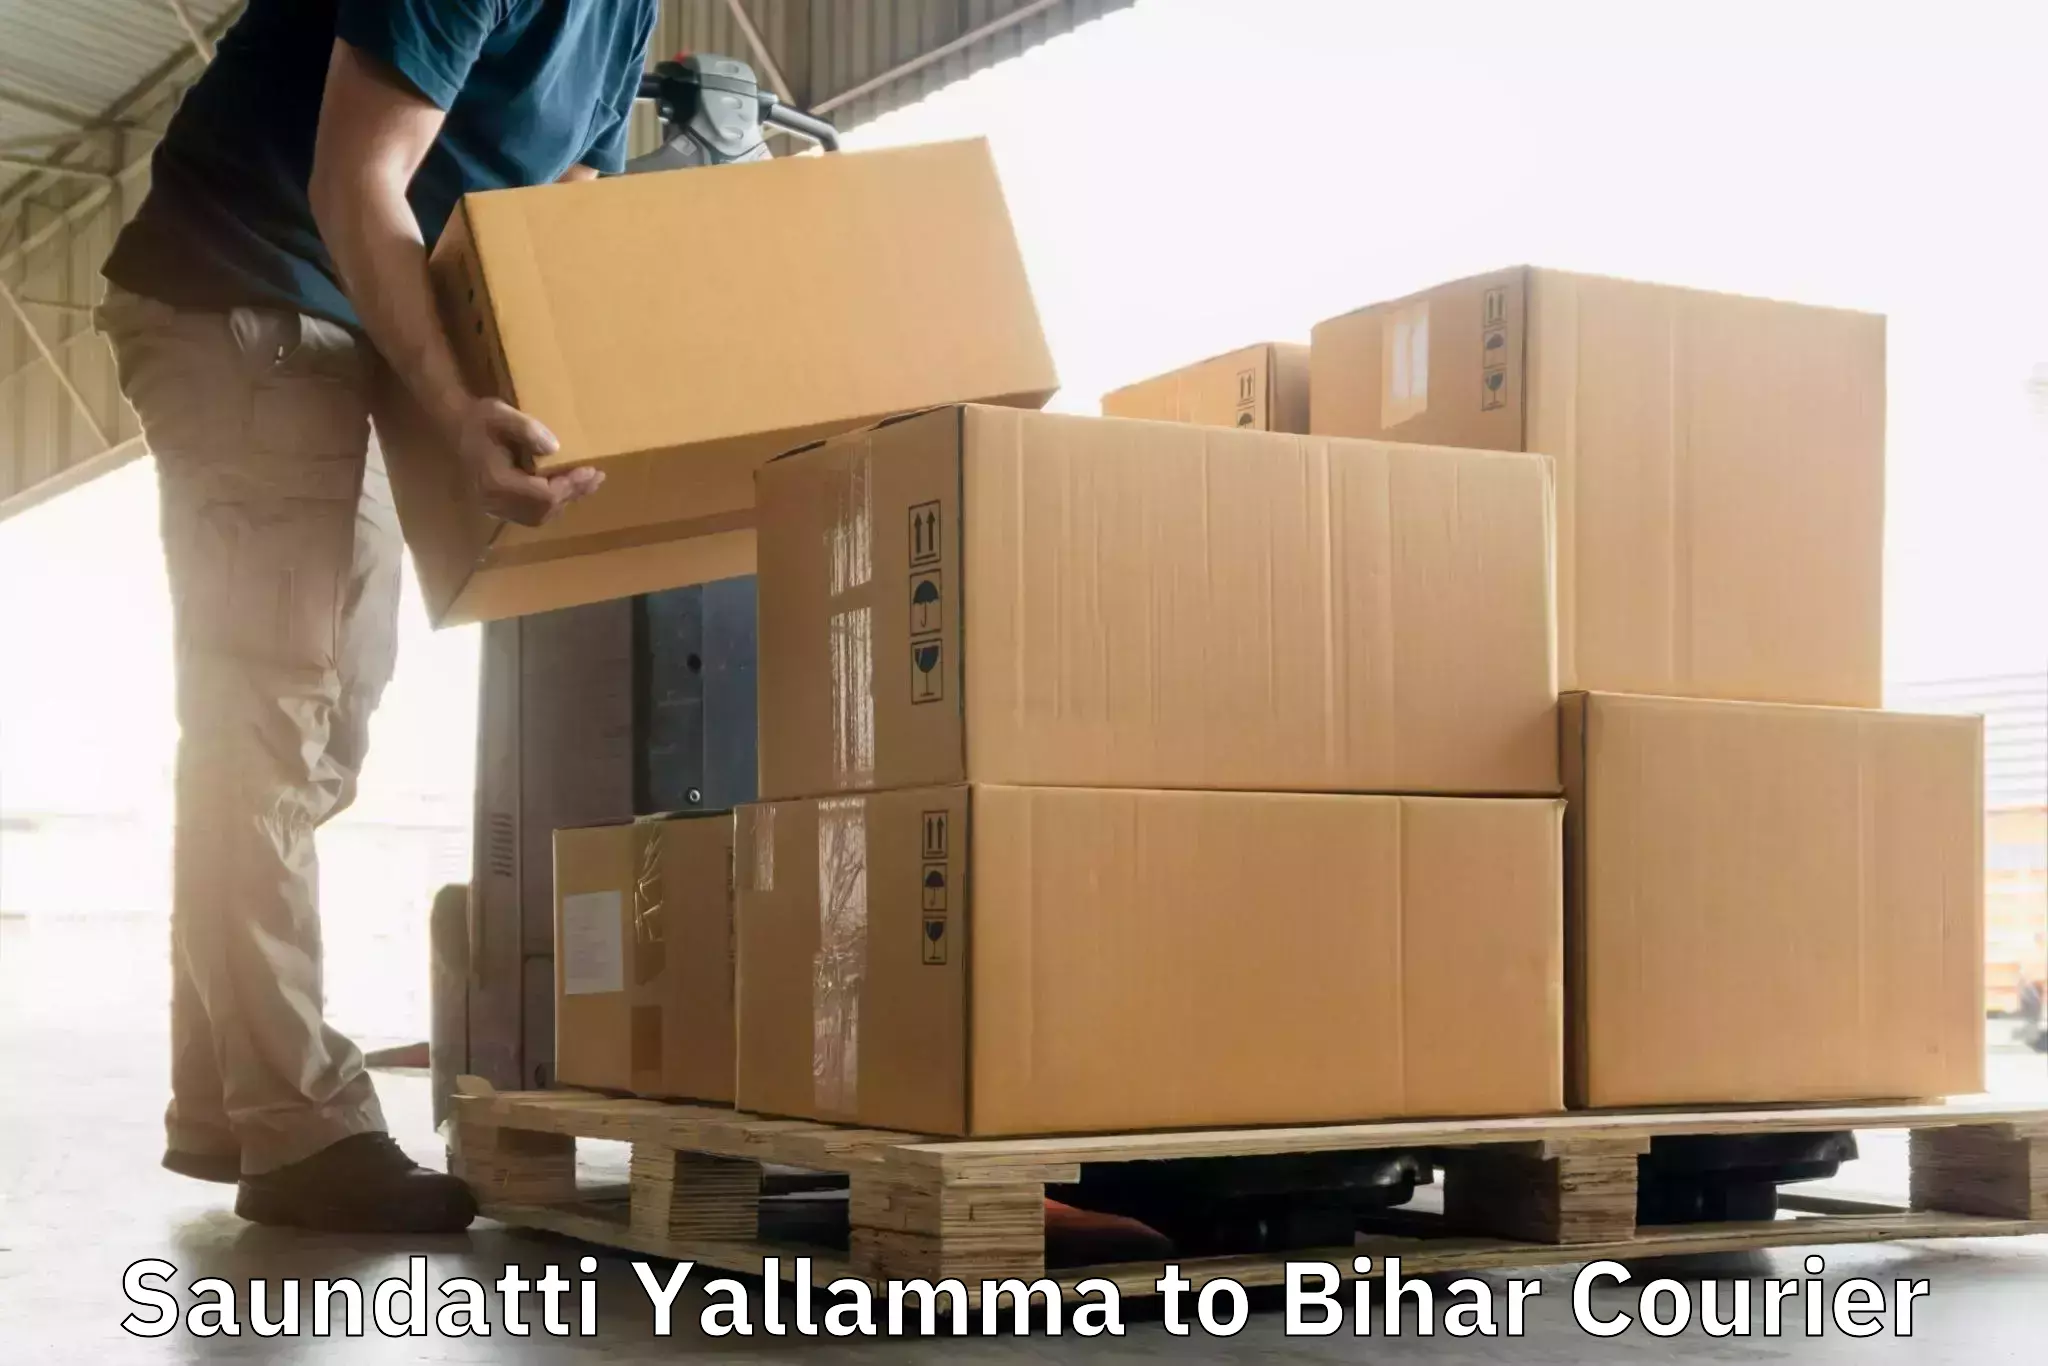 Express delivery capabilities Saundatti Yallamma to Birpur